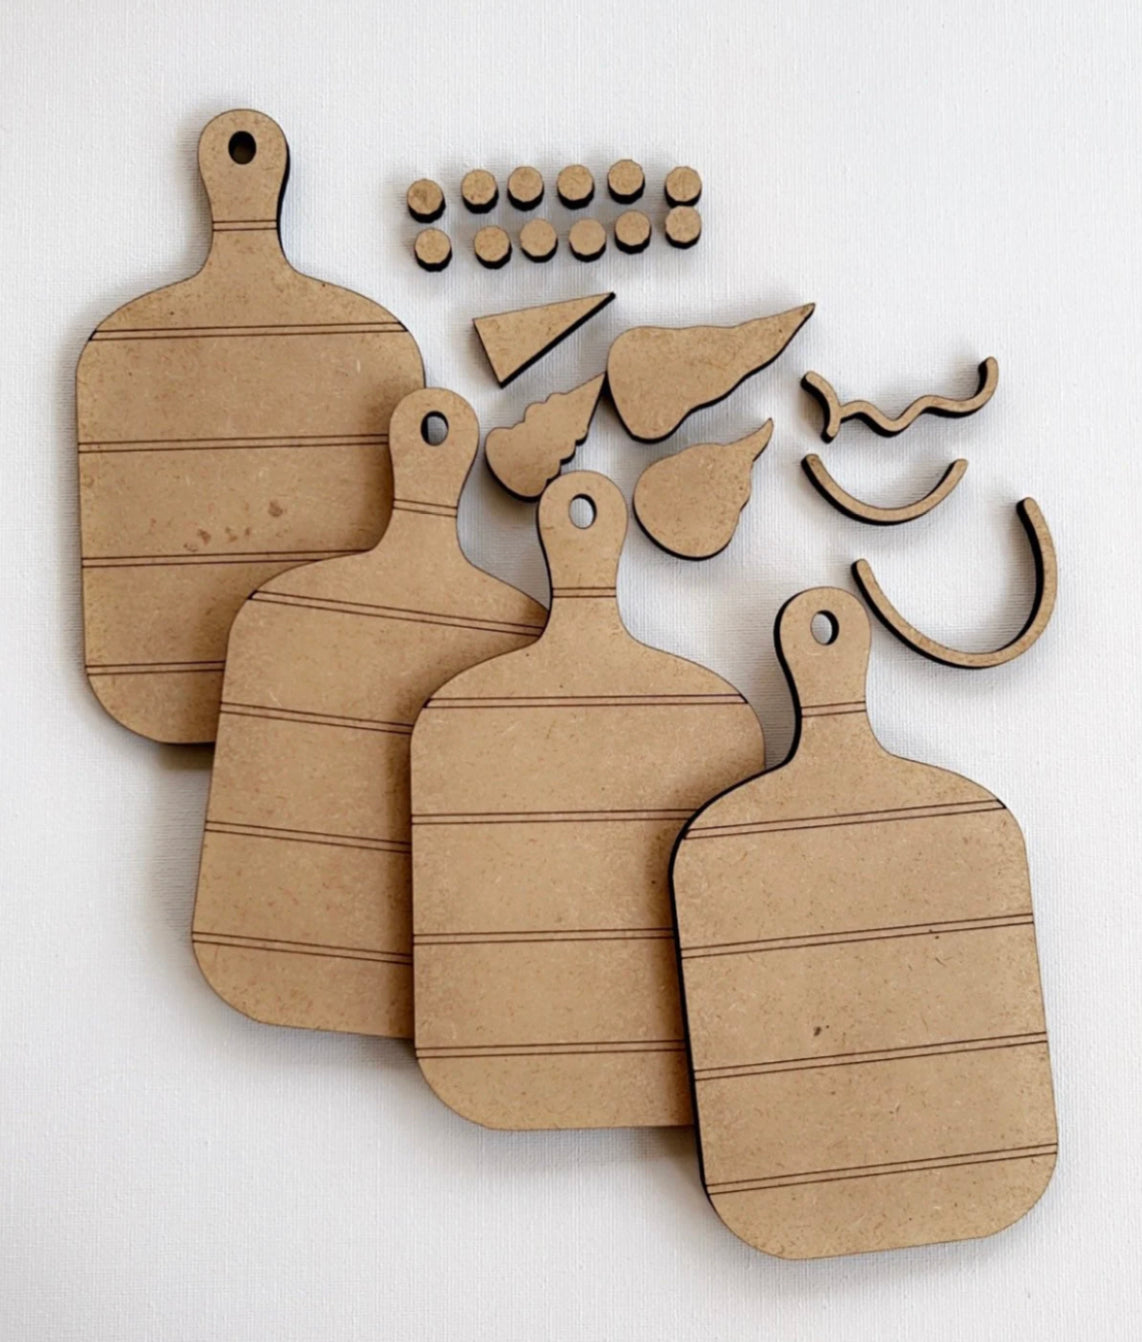 Set of 4 Snowman Mini Cutting Boards Rectangle Shape- DIY Craft Kit –  Studio J Company